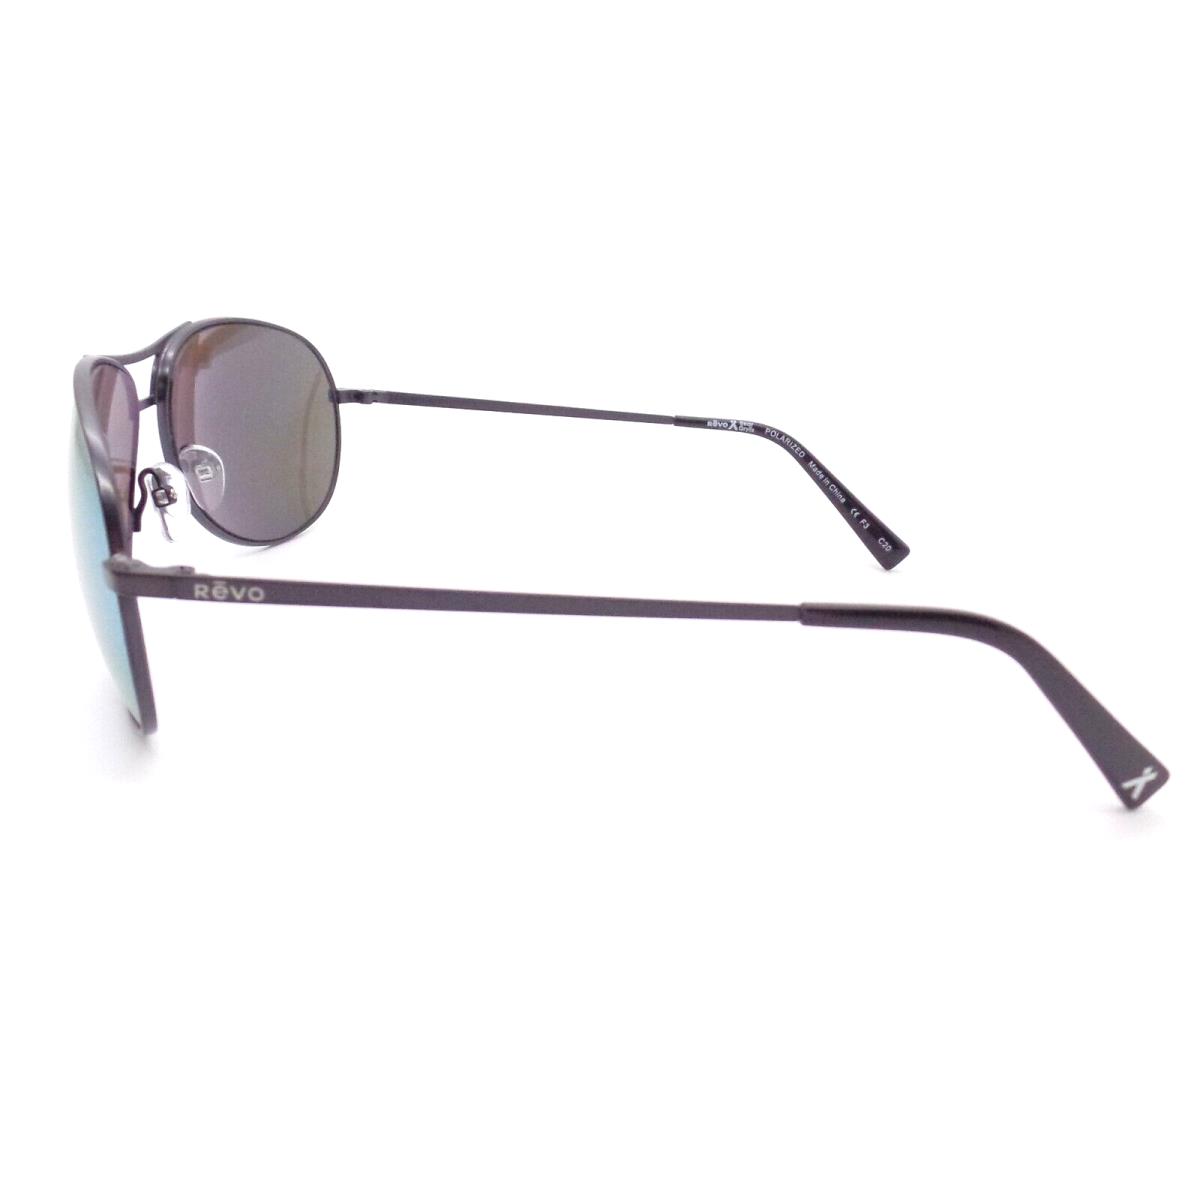 Revo sunglasses  - Matte Dark Gunmetal Frame 2